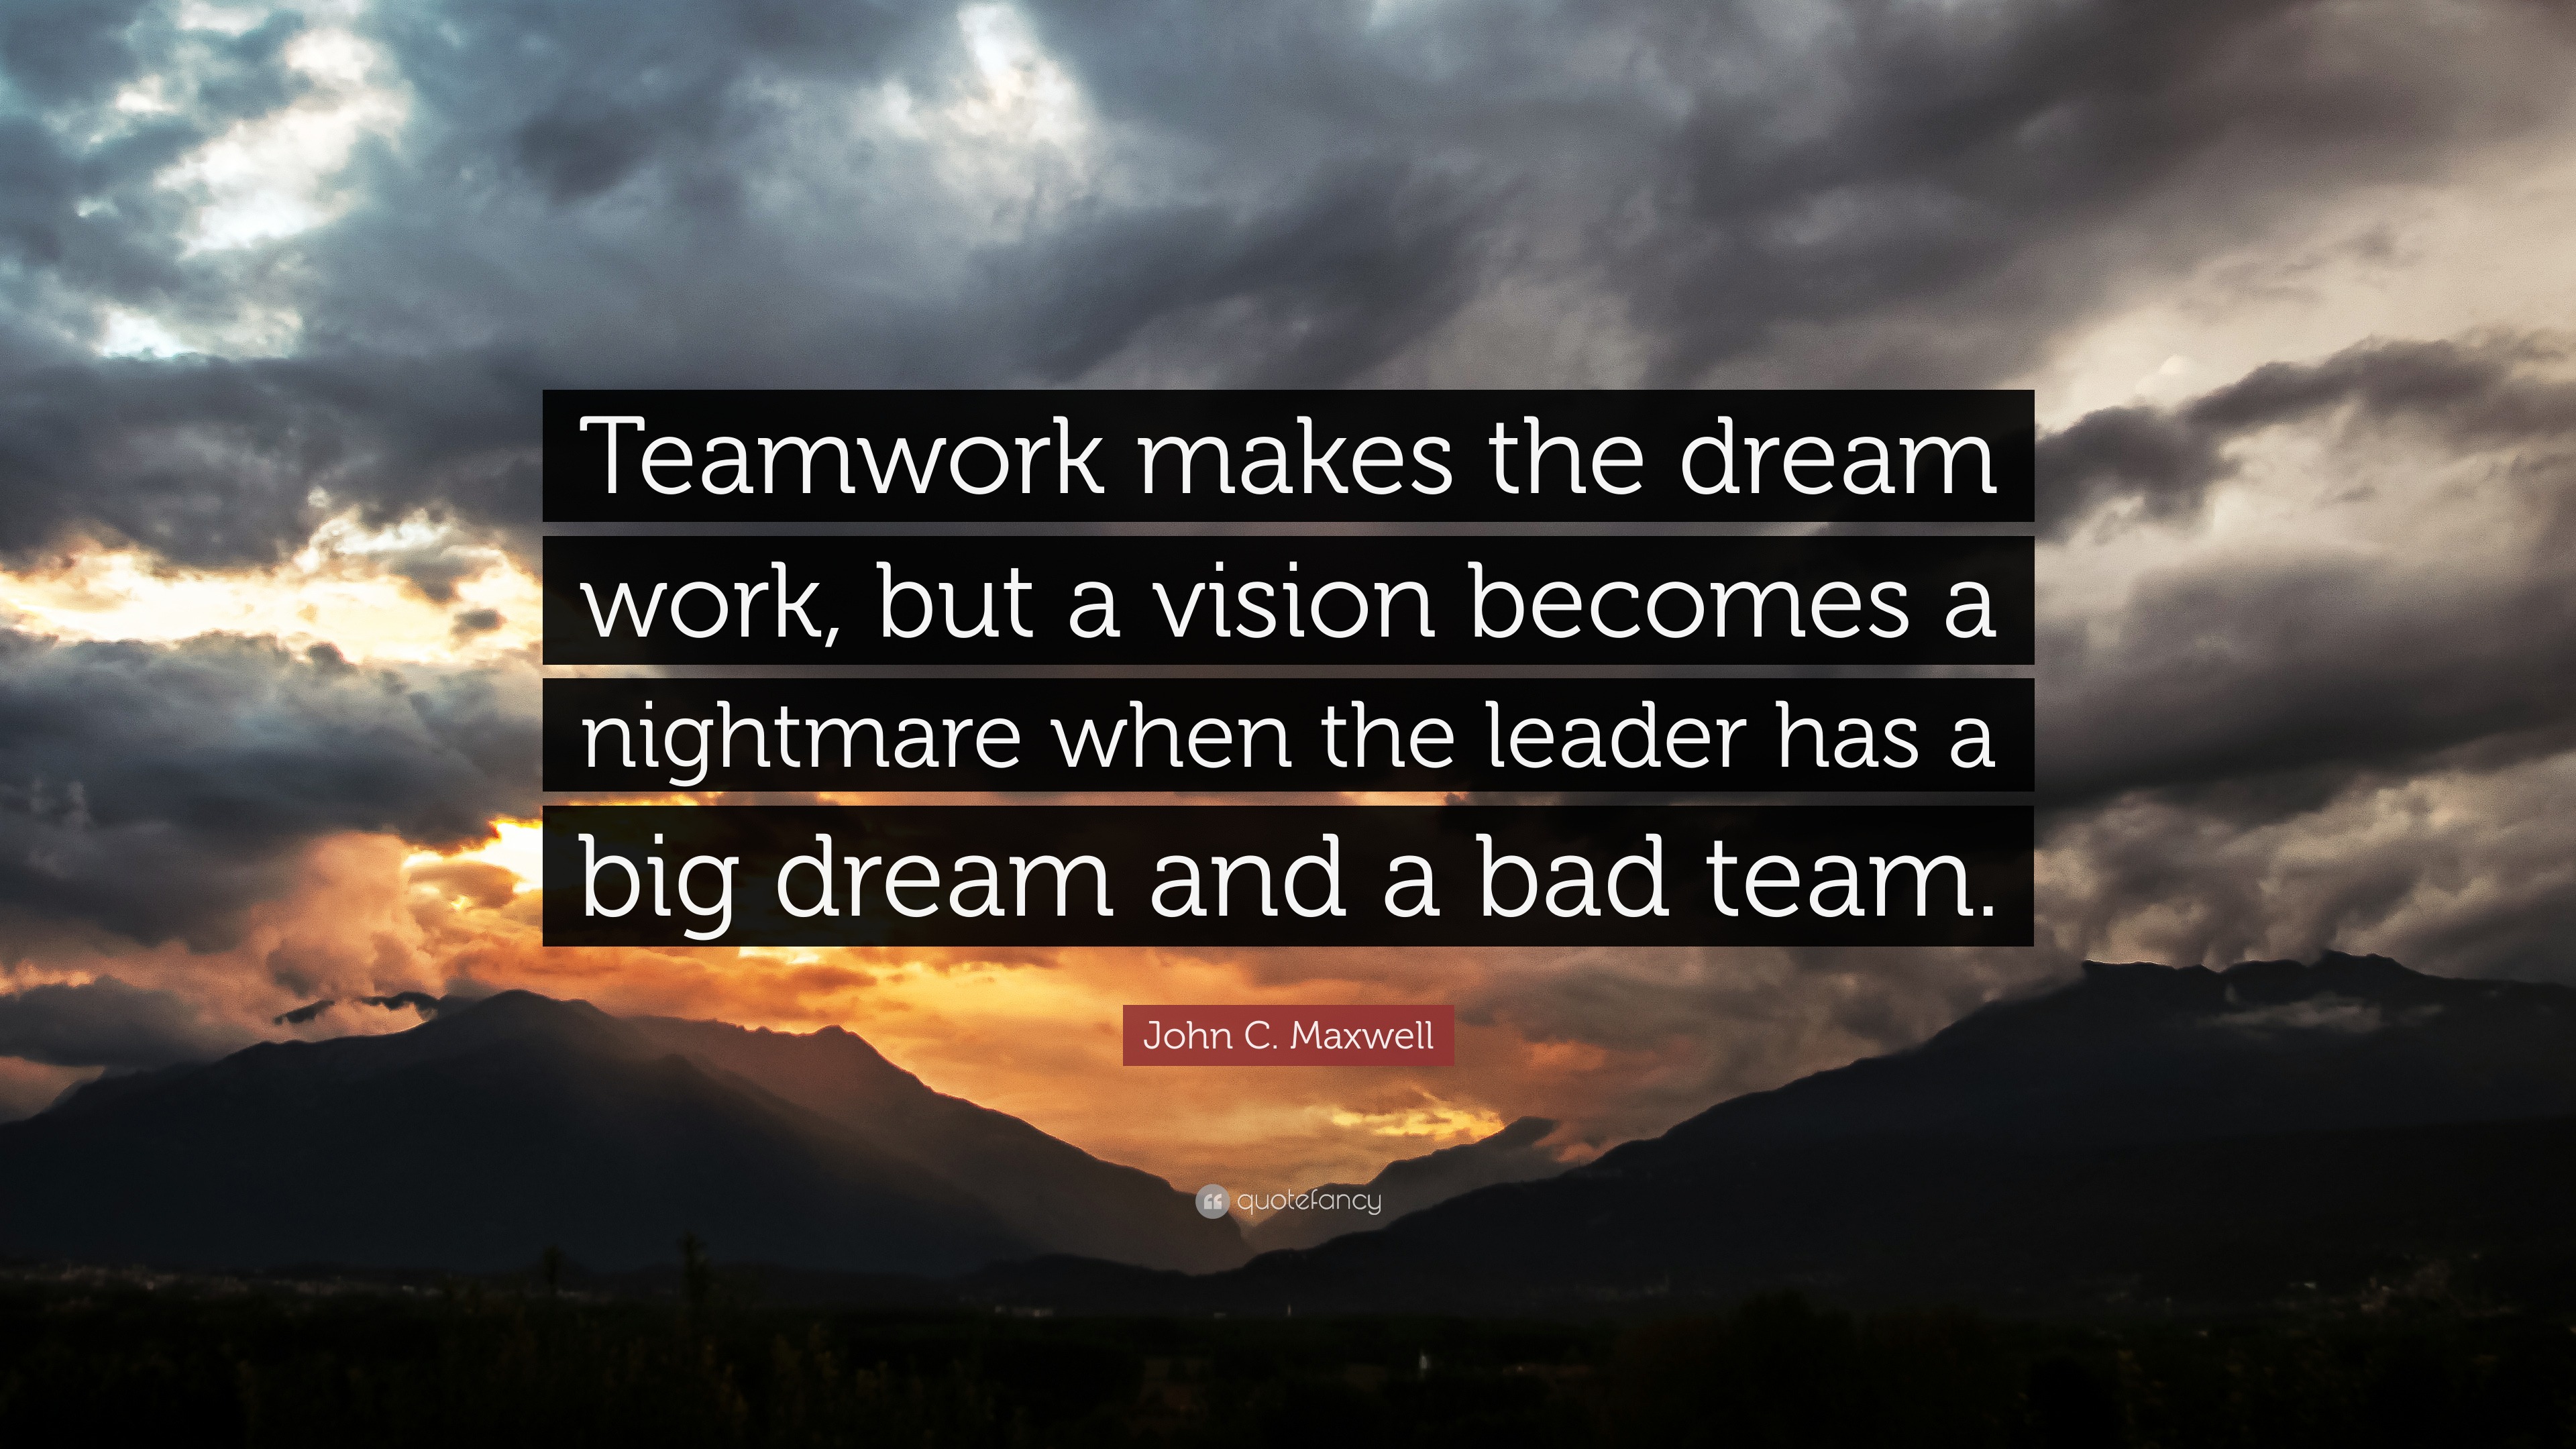 John C. Maxwell Quote: “Teamwork makes the dream work, but a vision